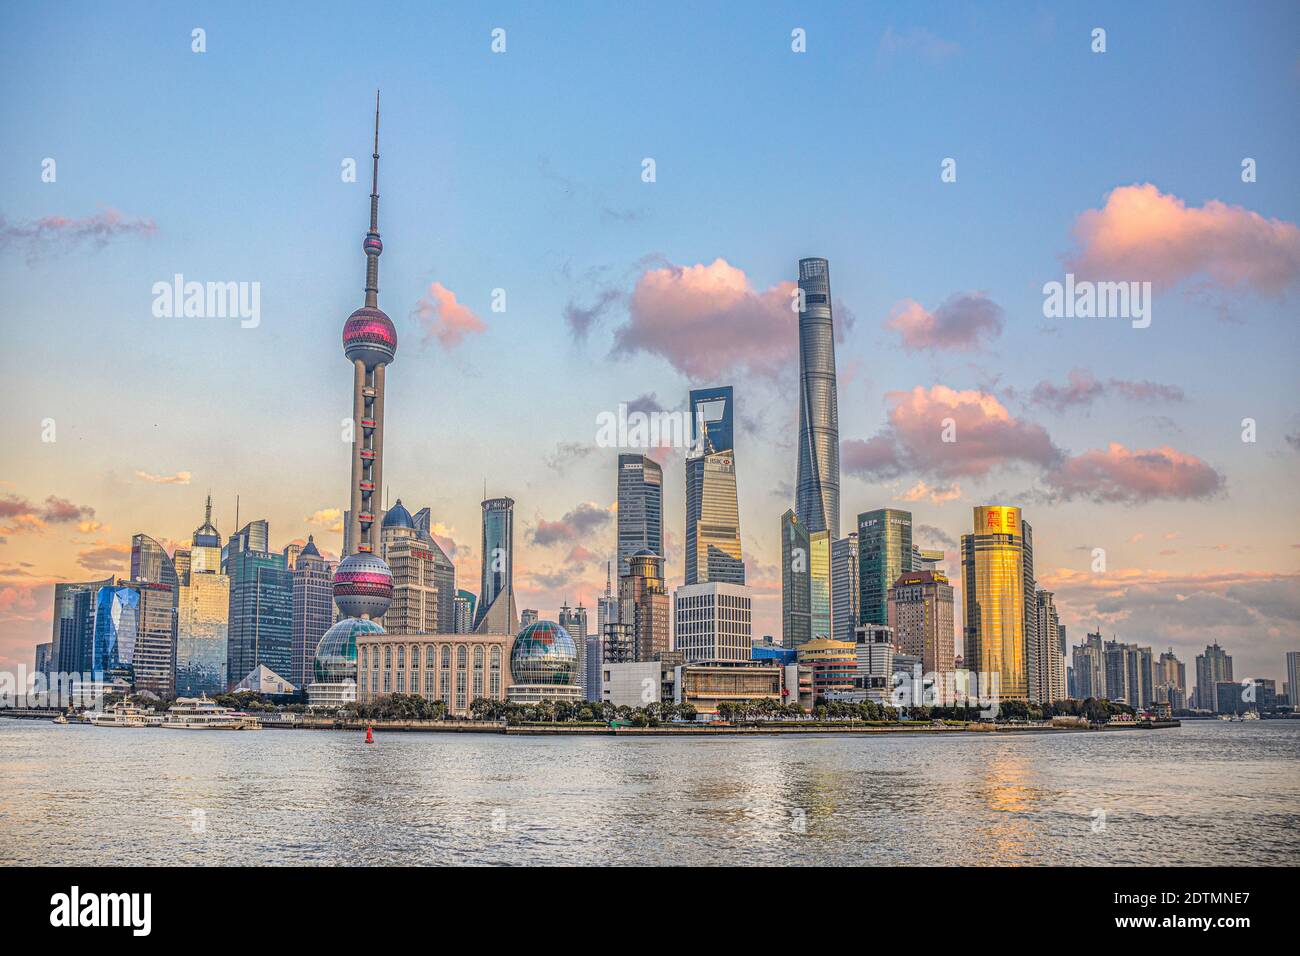 China, Shanghai City, Pudong district skyline, Stock Photo